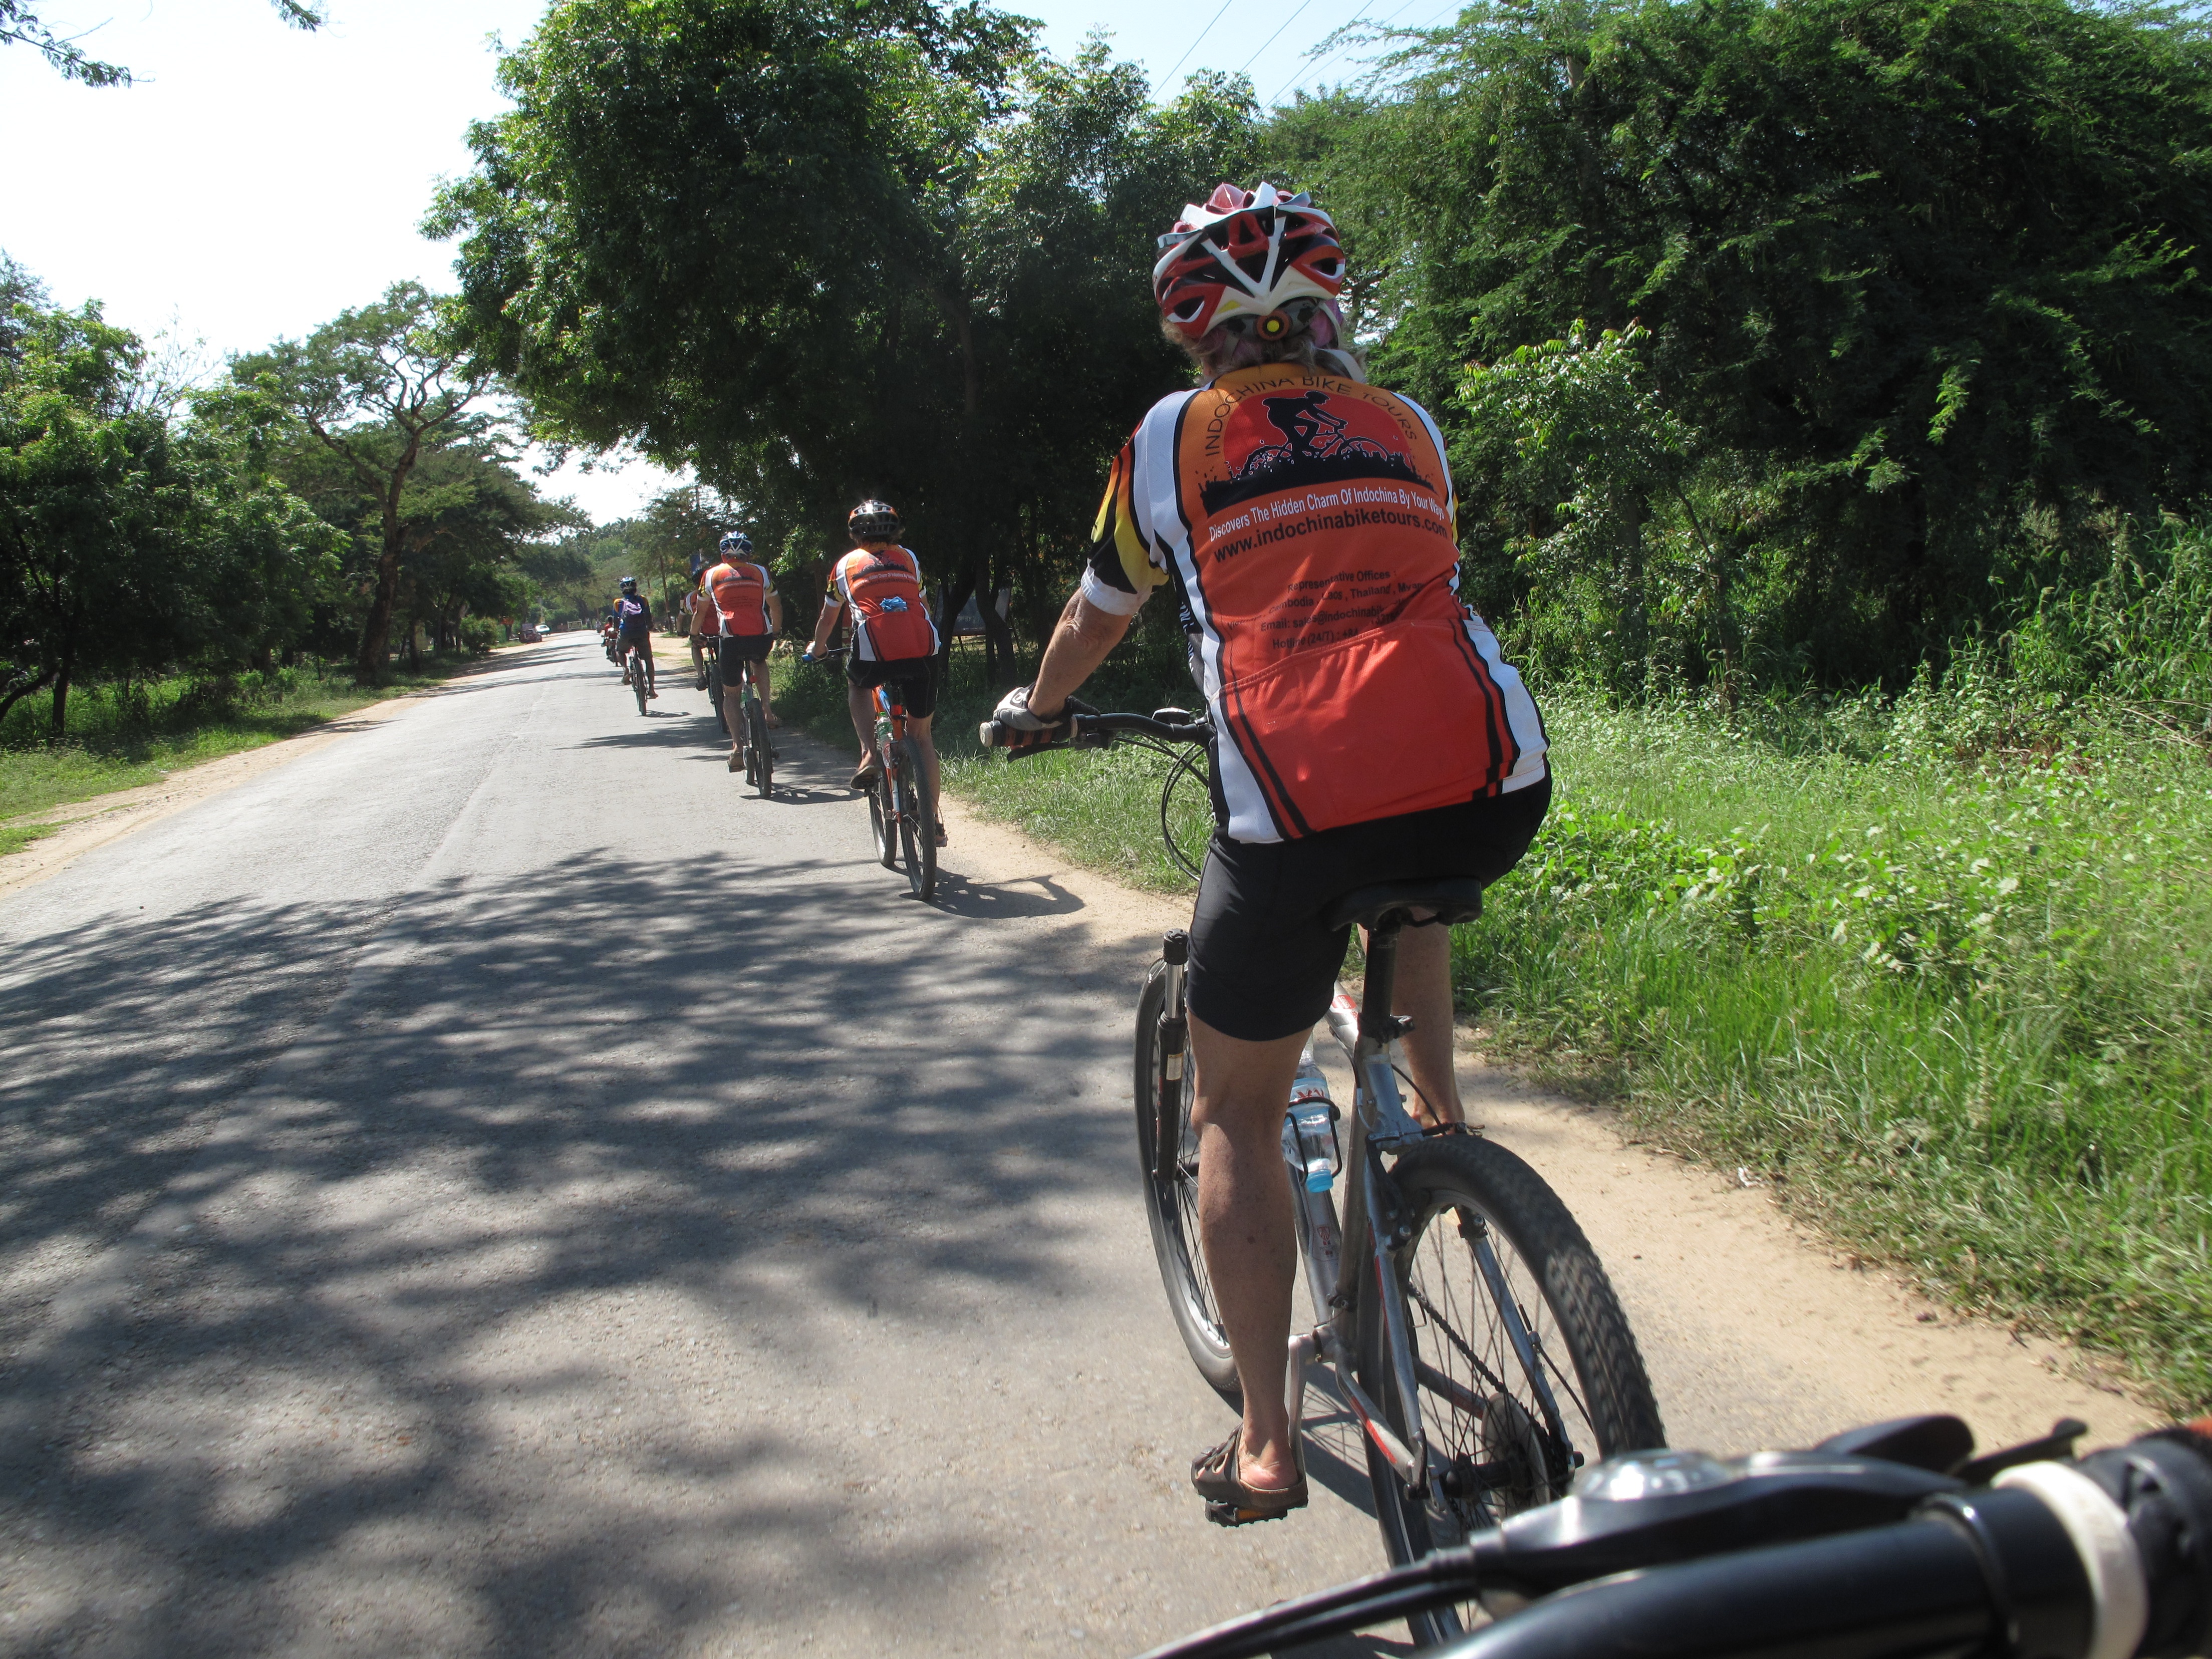 Siem Reap Cycling To Saigon - 6 days